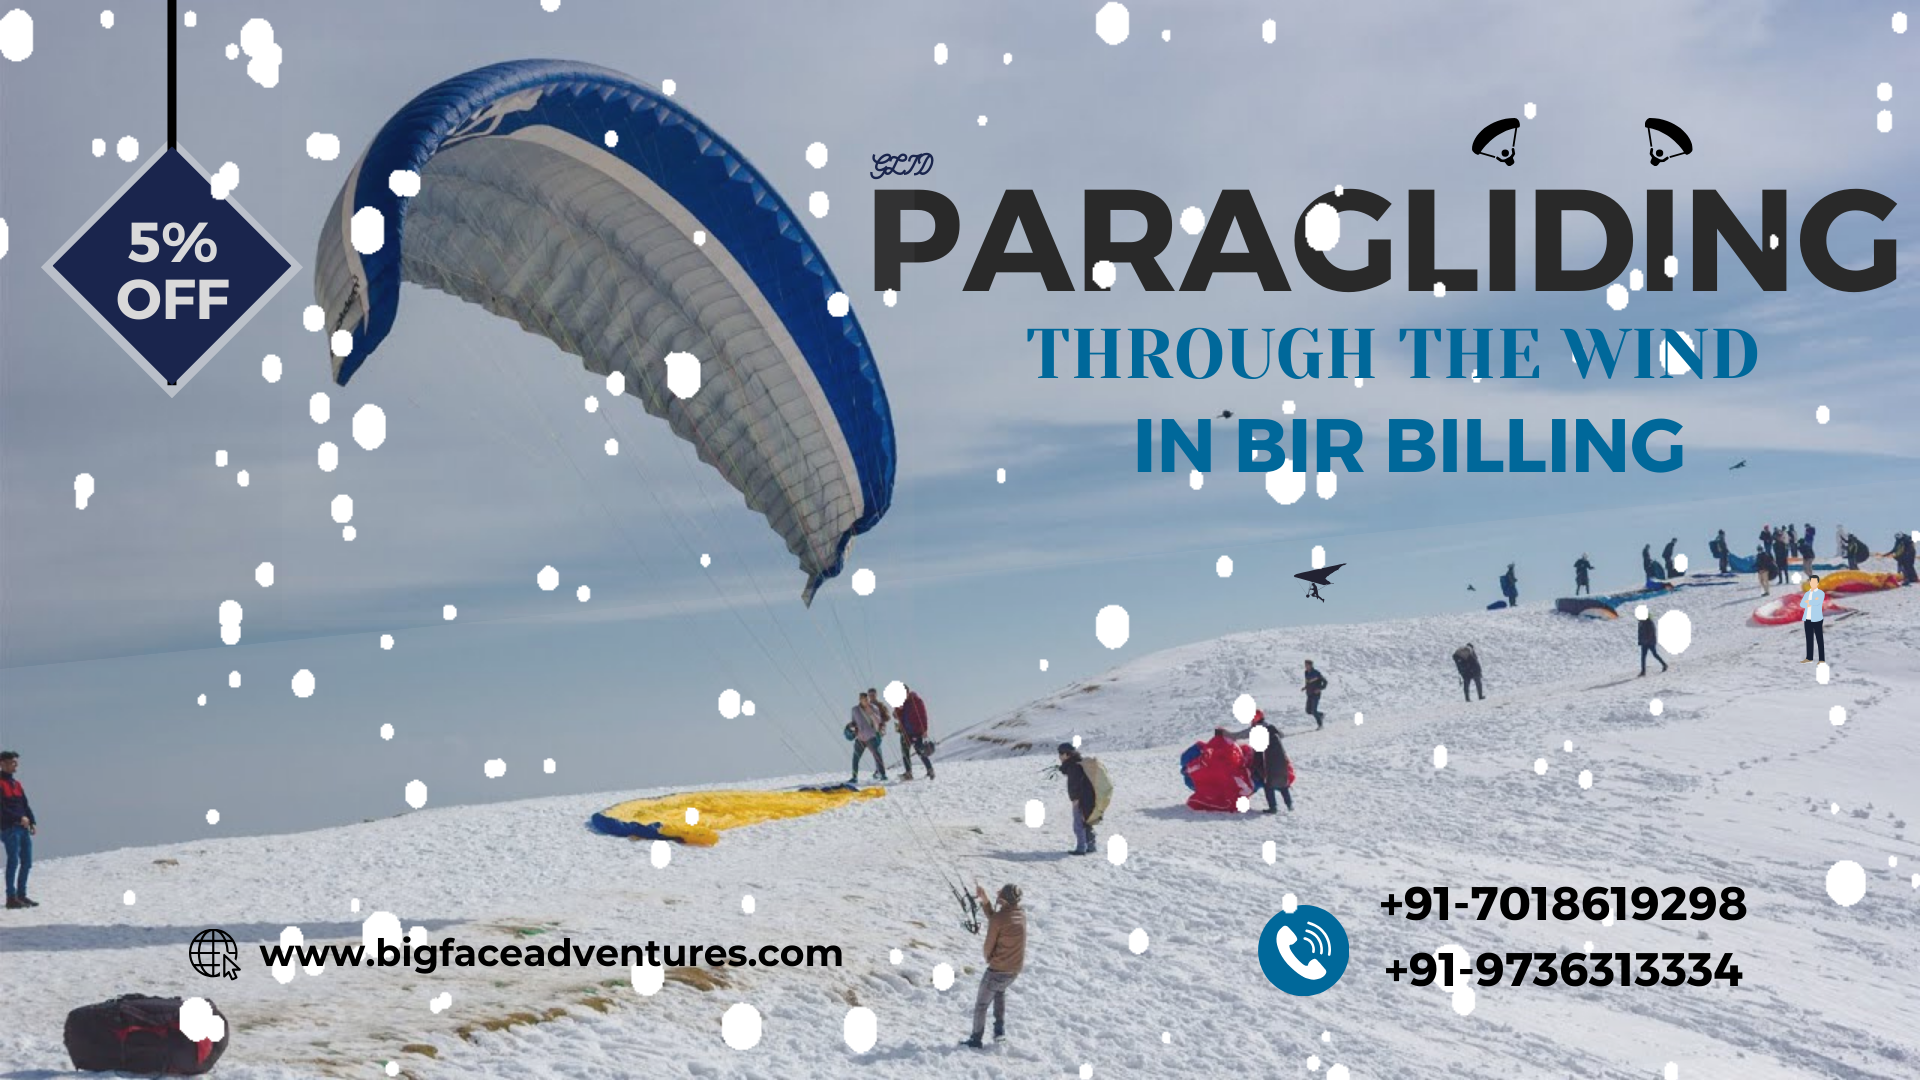 Benefits of Paragliding in January in Bir Billing